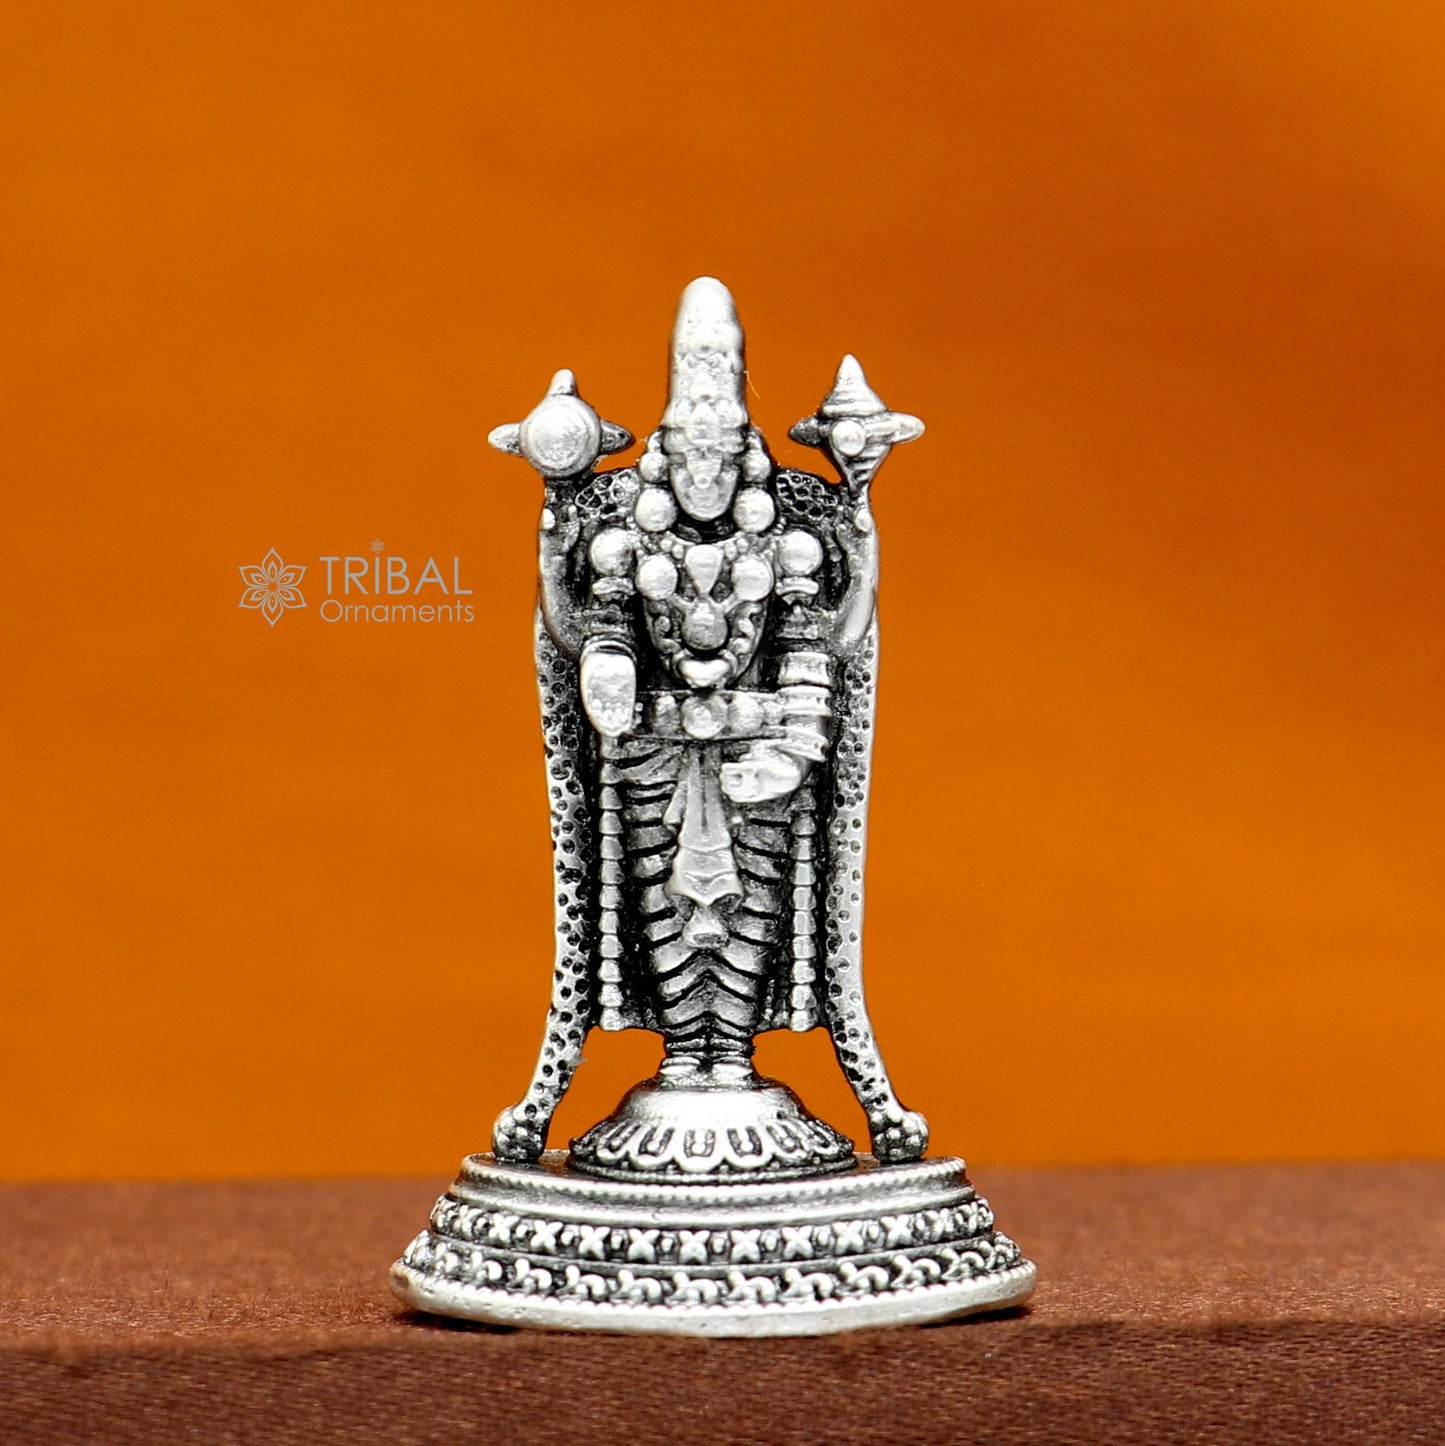 4cm 925 sterling silver stylish divine Venkateswara idol tirupati balaji statue sculpture figurine amazing crafted statue gift art734 - TRIBAL ORNAMENTS